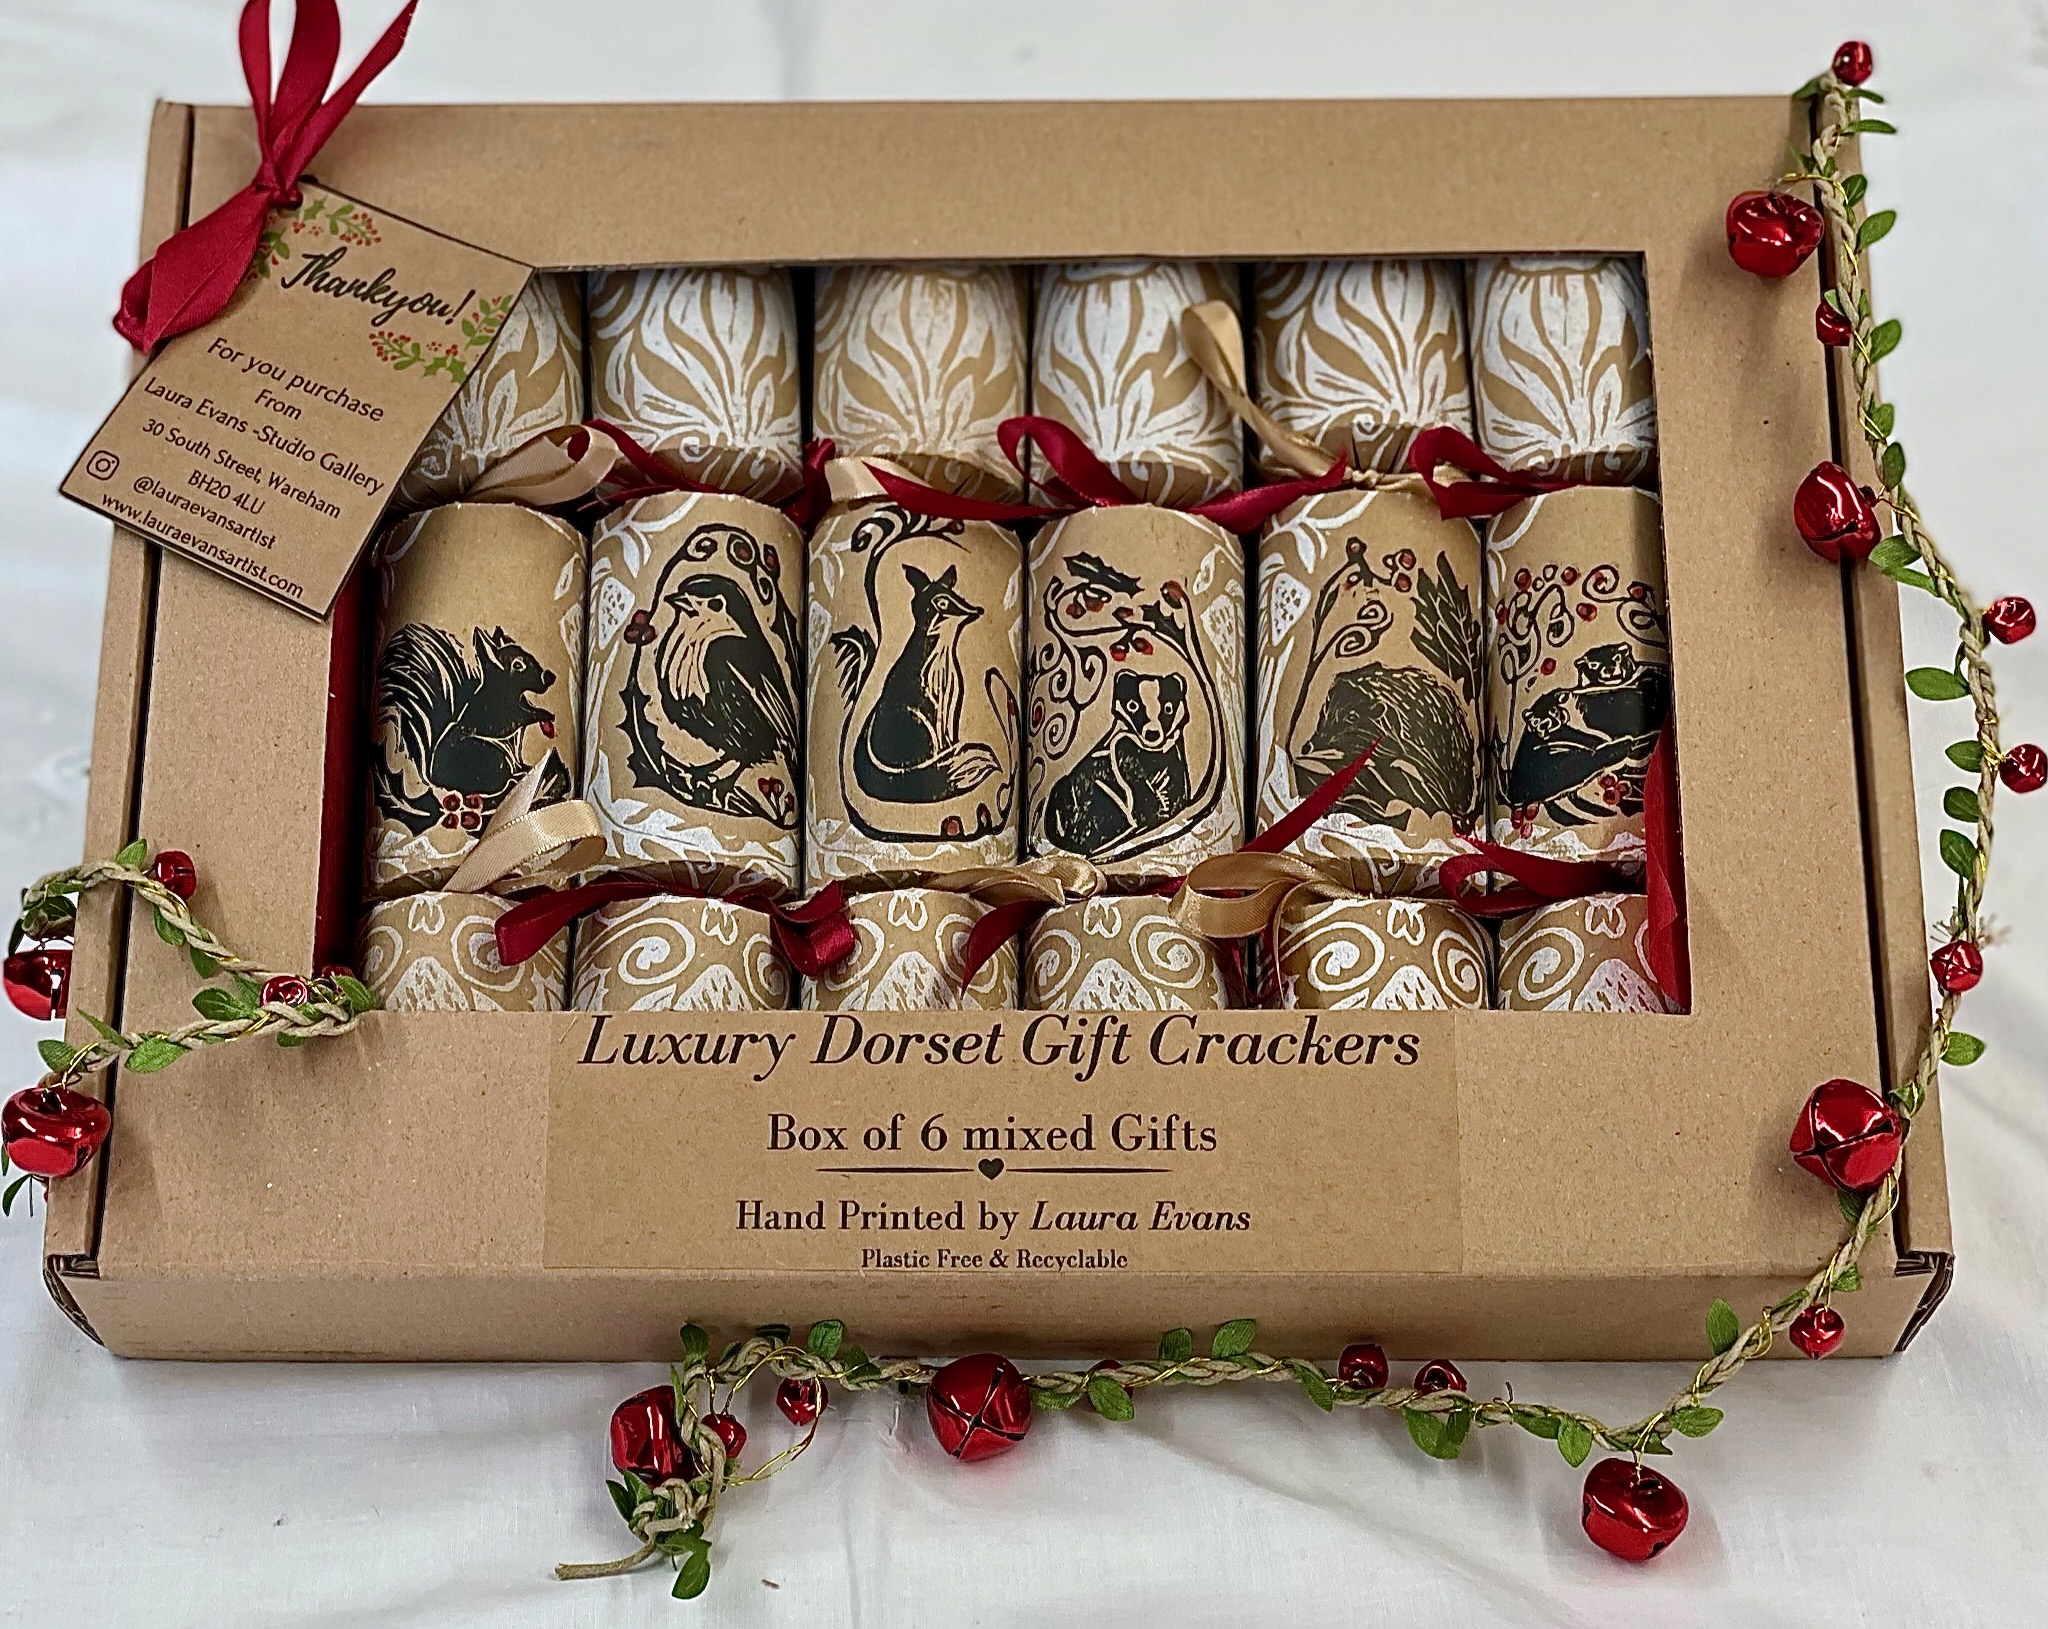 Eight Luxury Dorset Gift Crackers